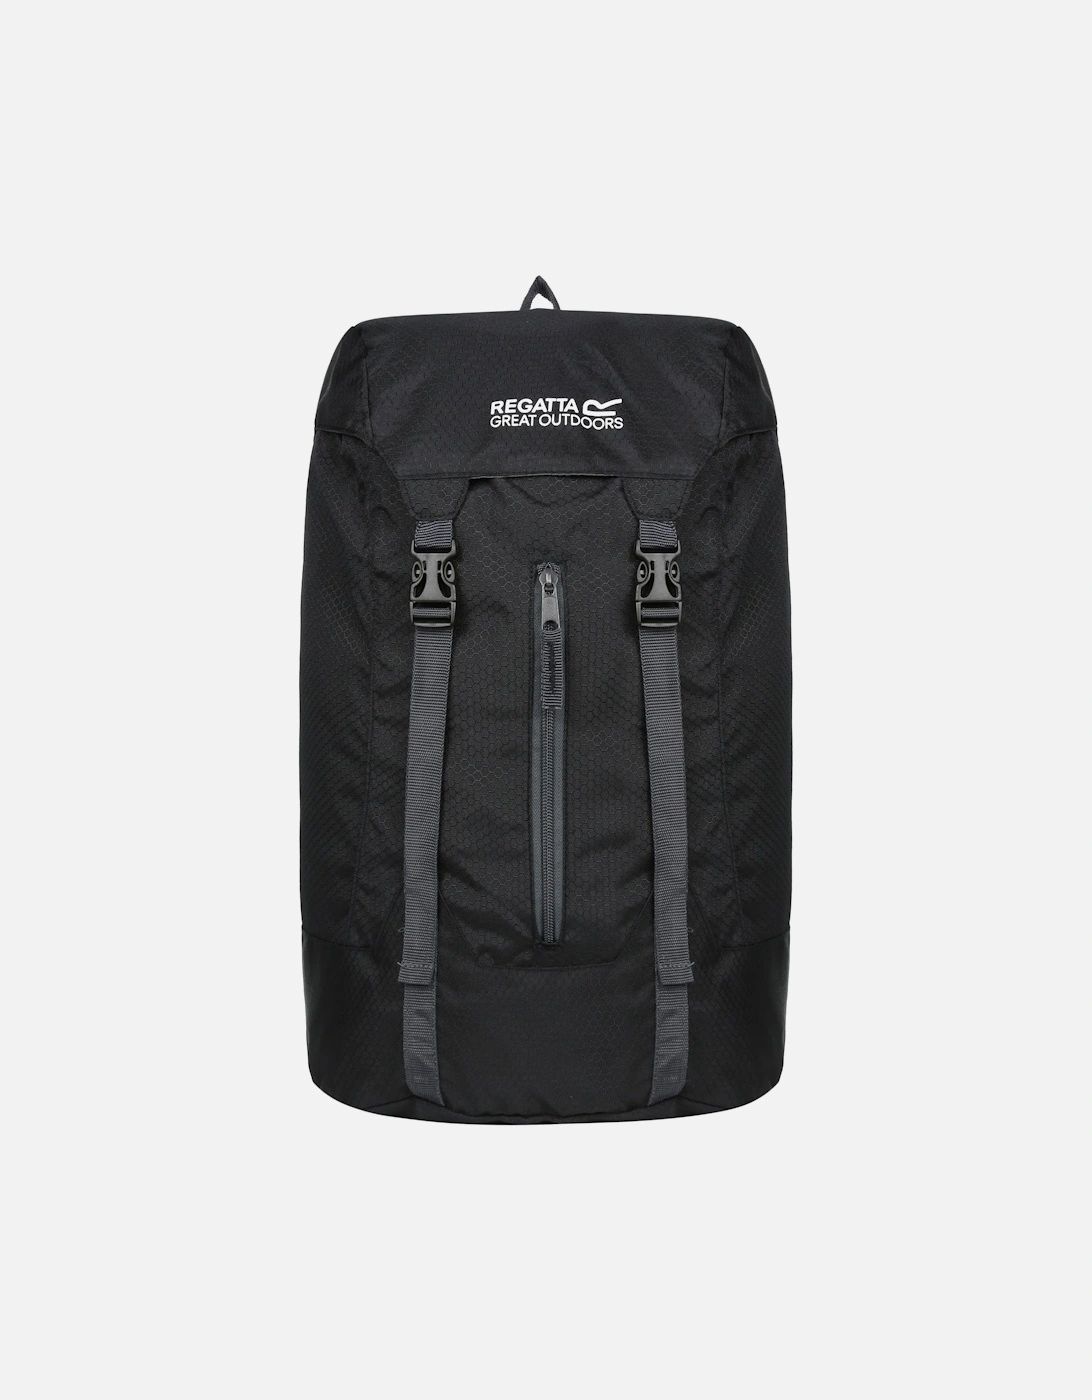 Great Outdoors Easypack Packaway Rucksack/Backpack (25 Litres), 6 of 5